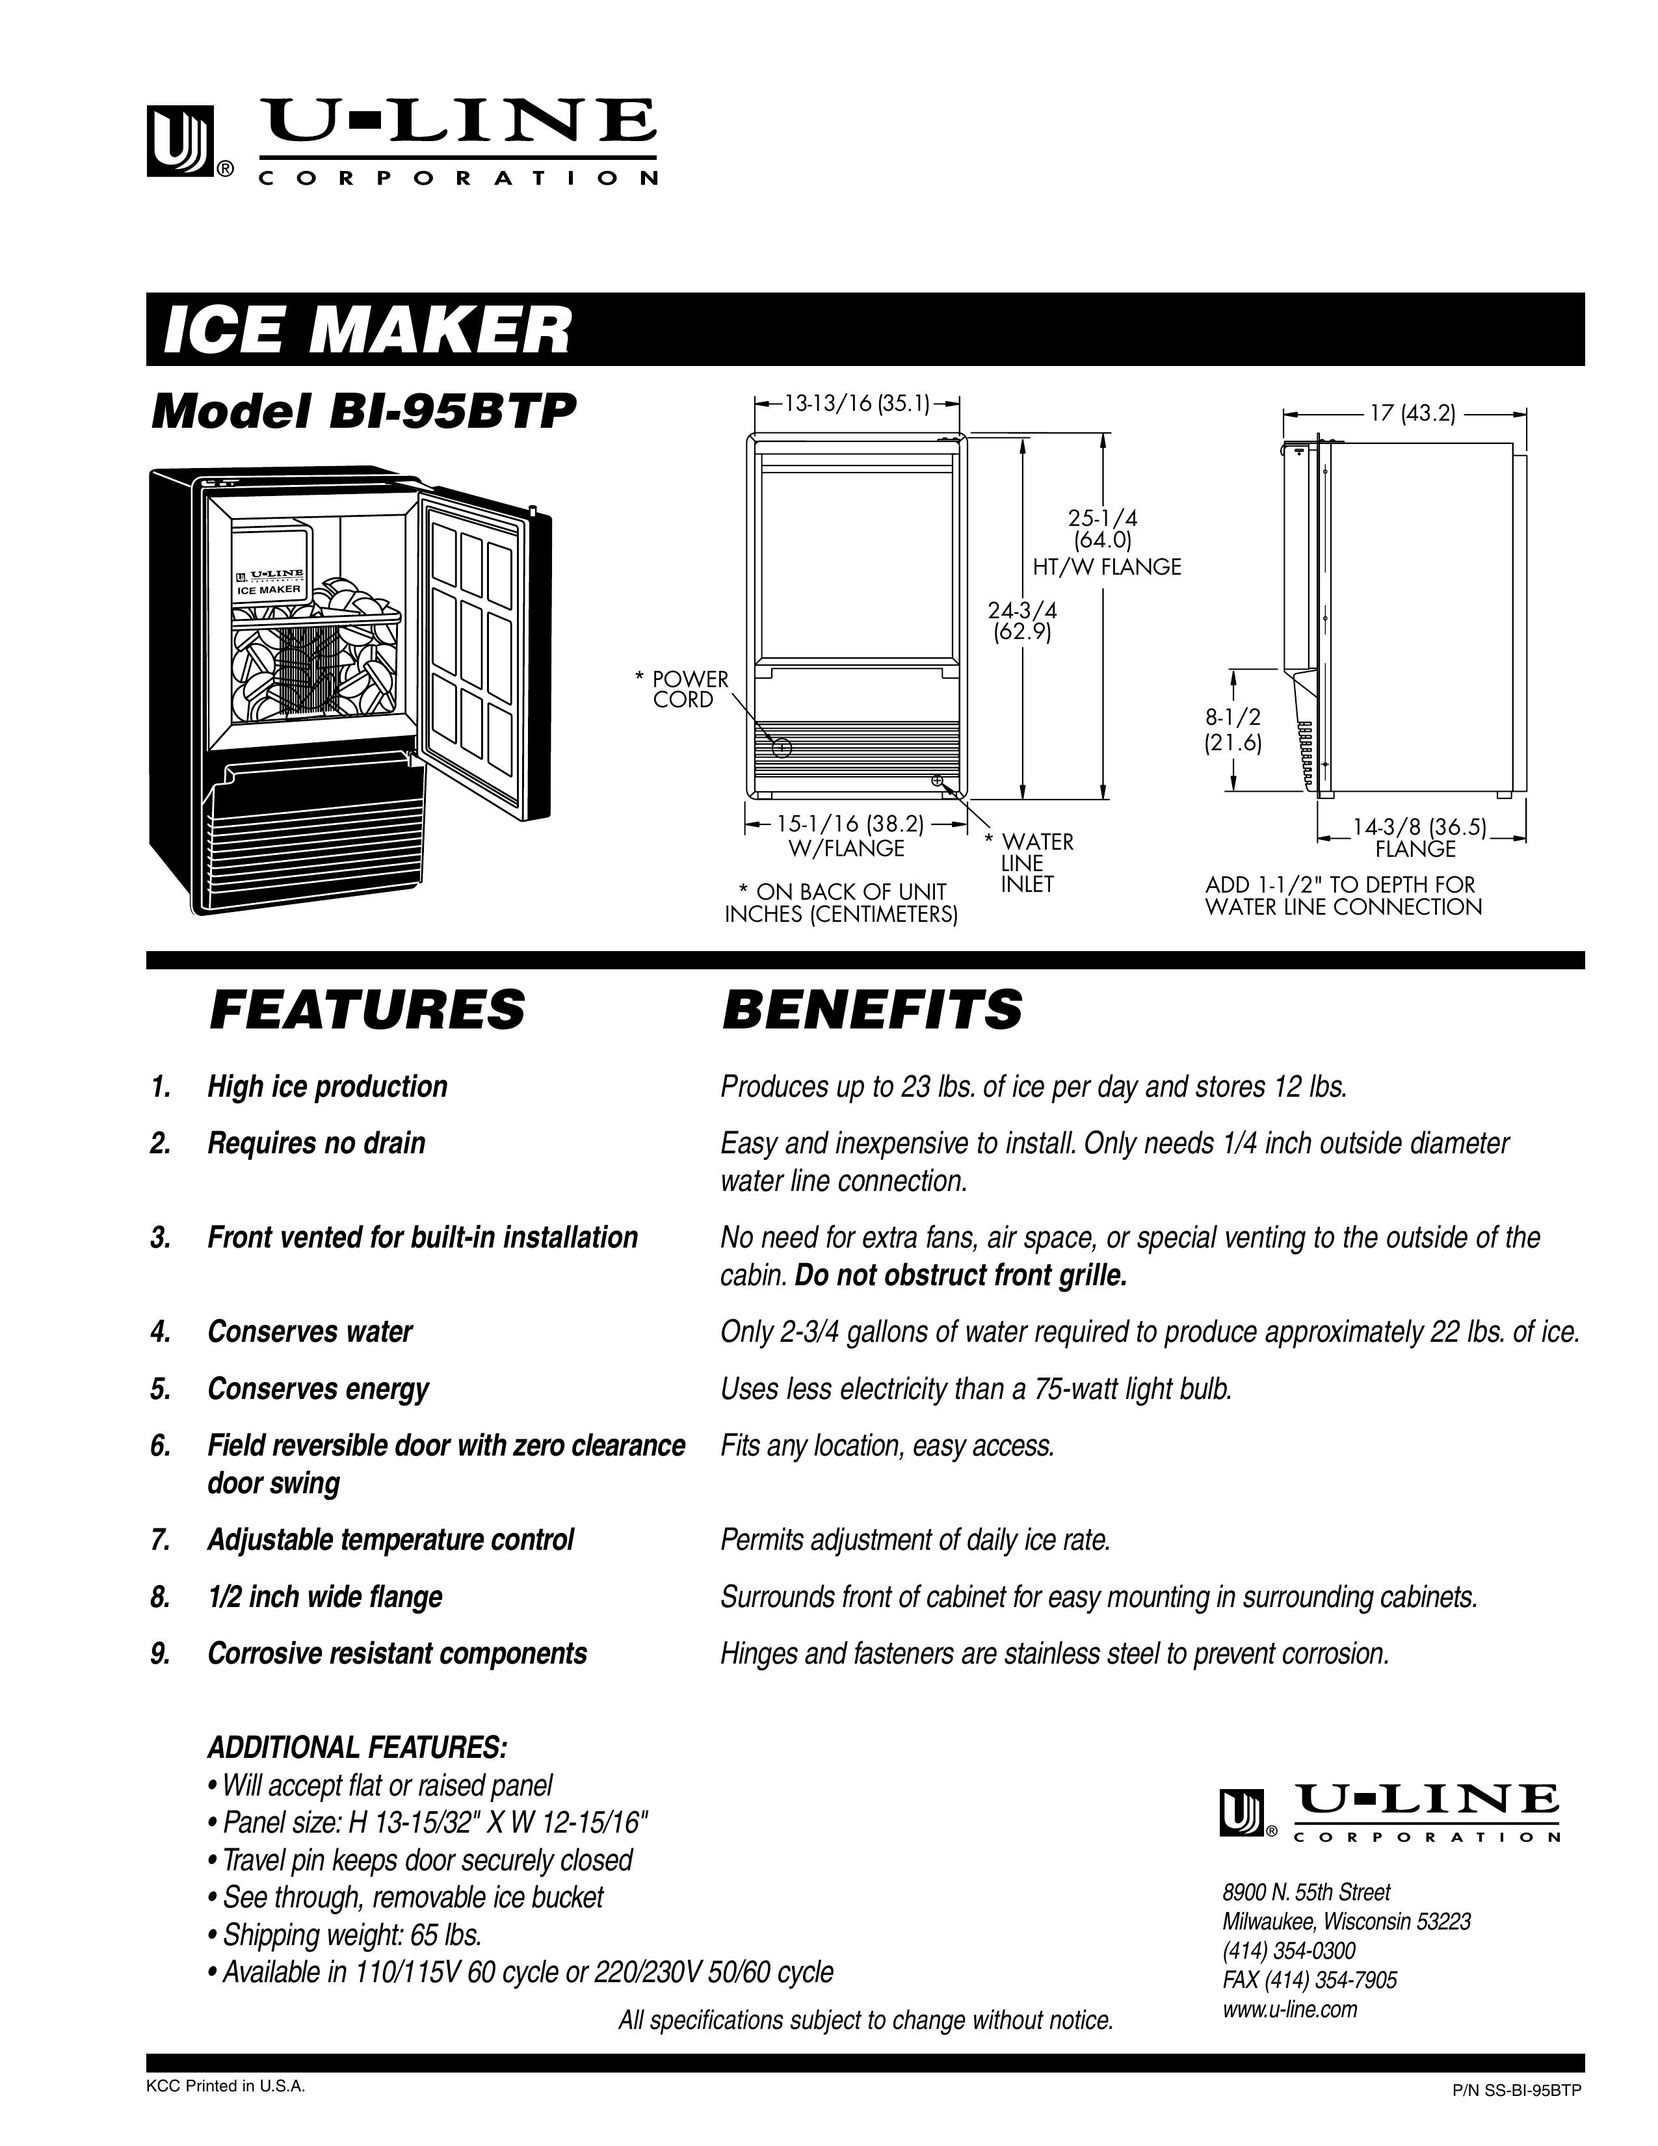 U-Line BI-95BTP Ice Maker User Manual